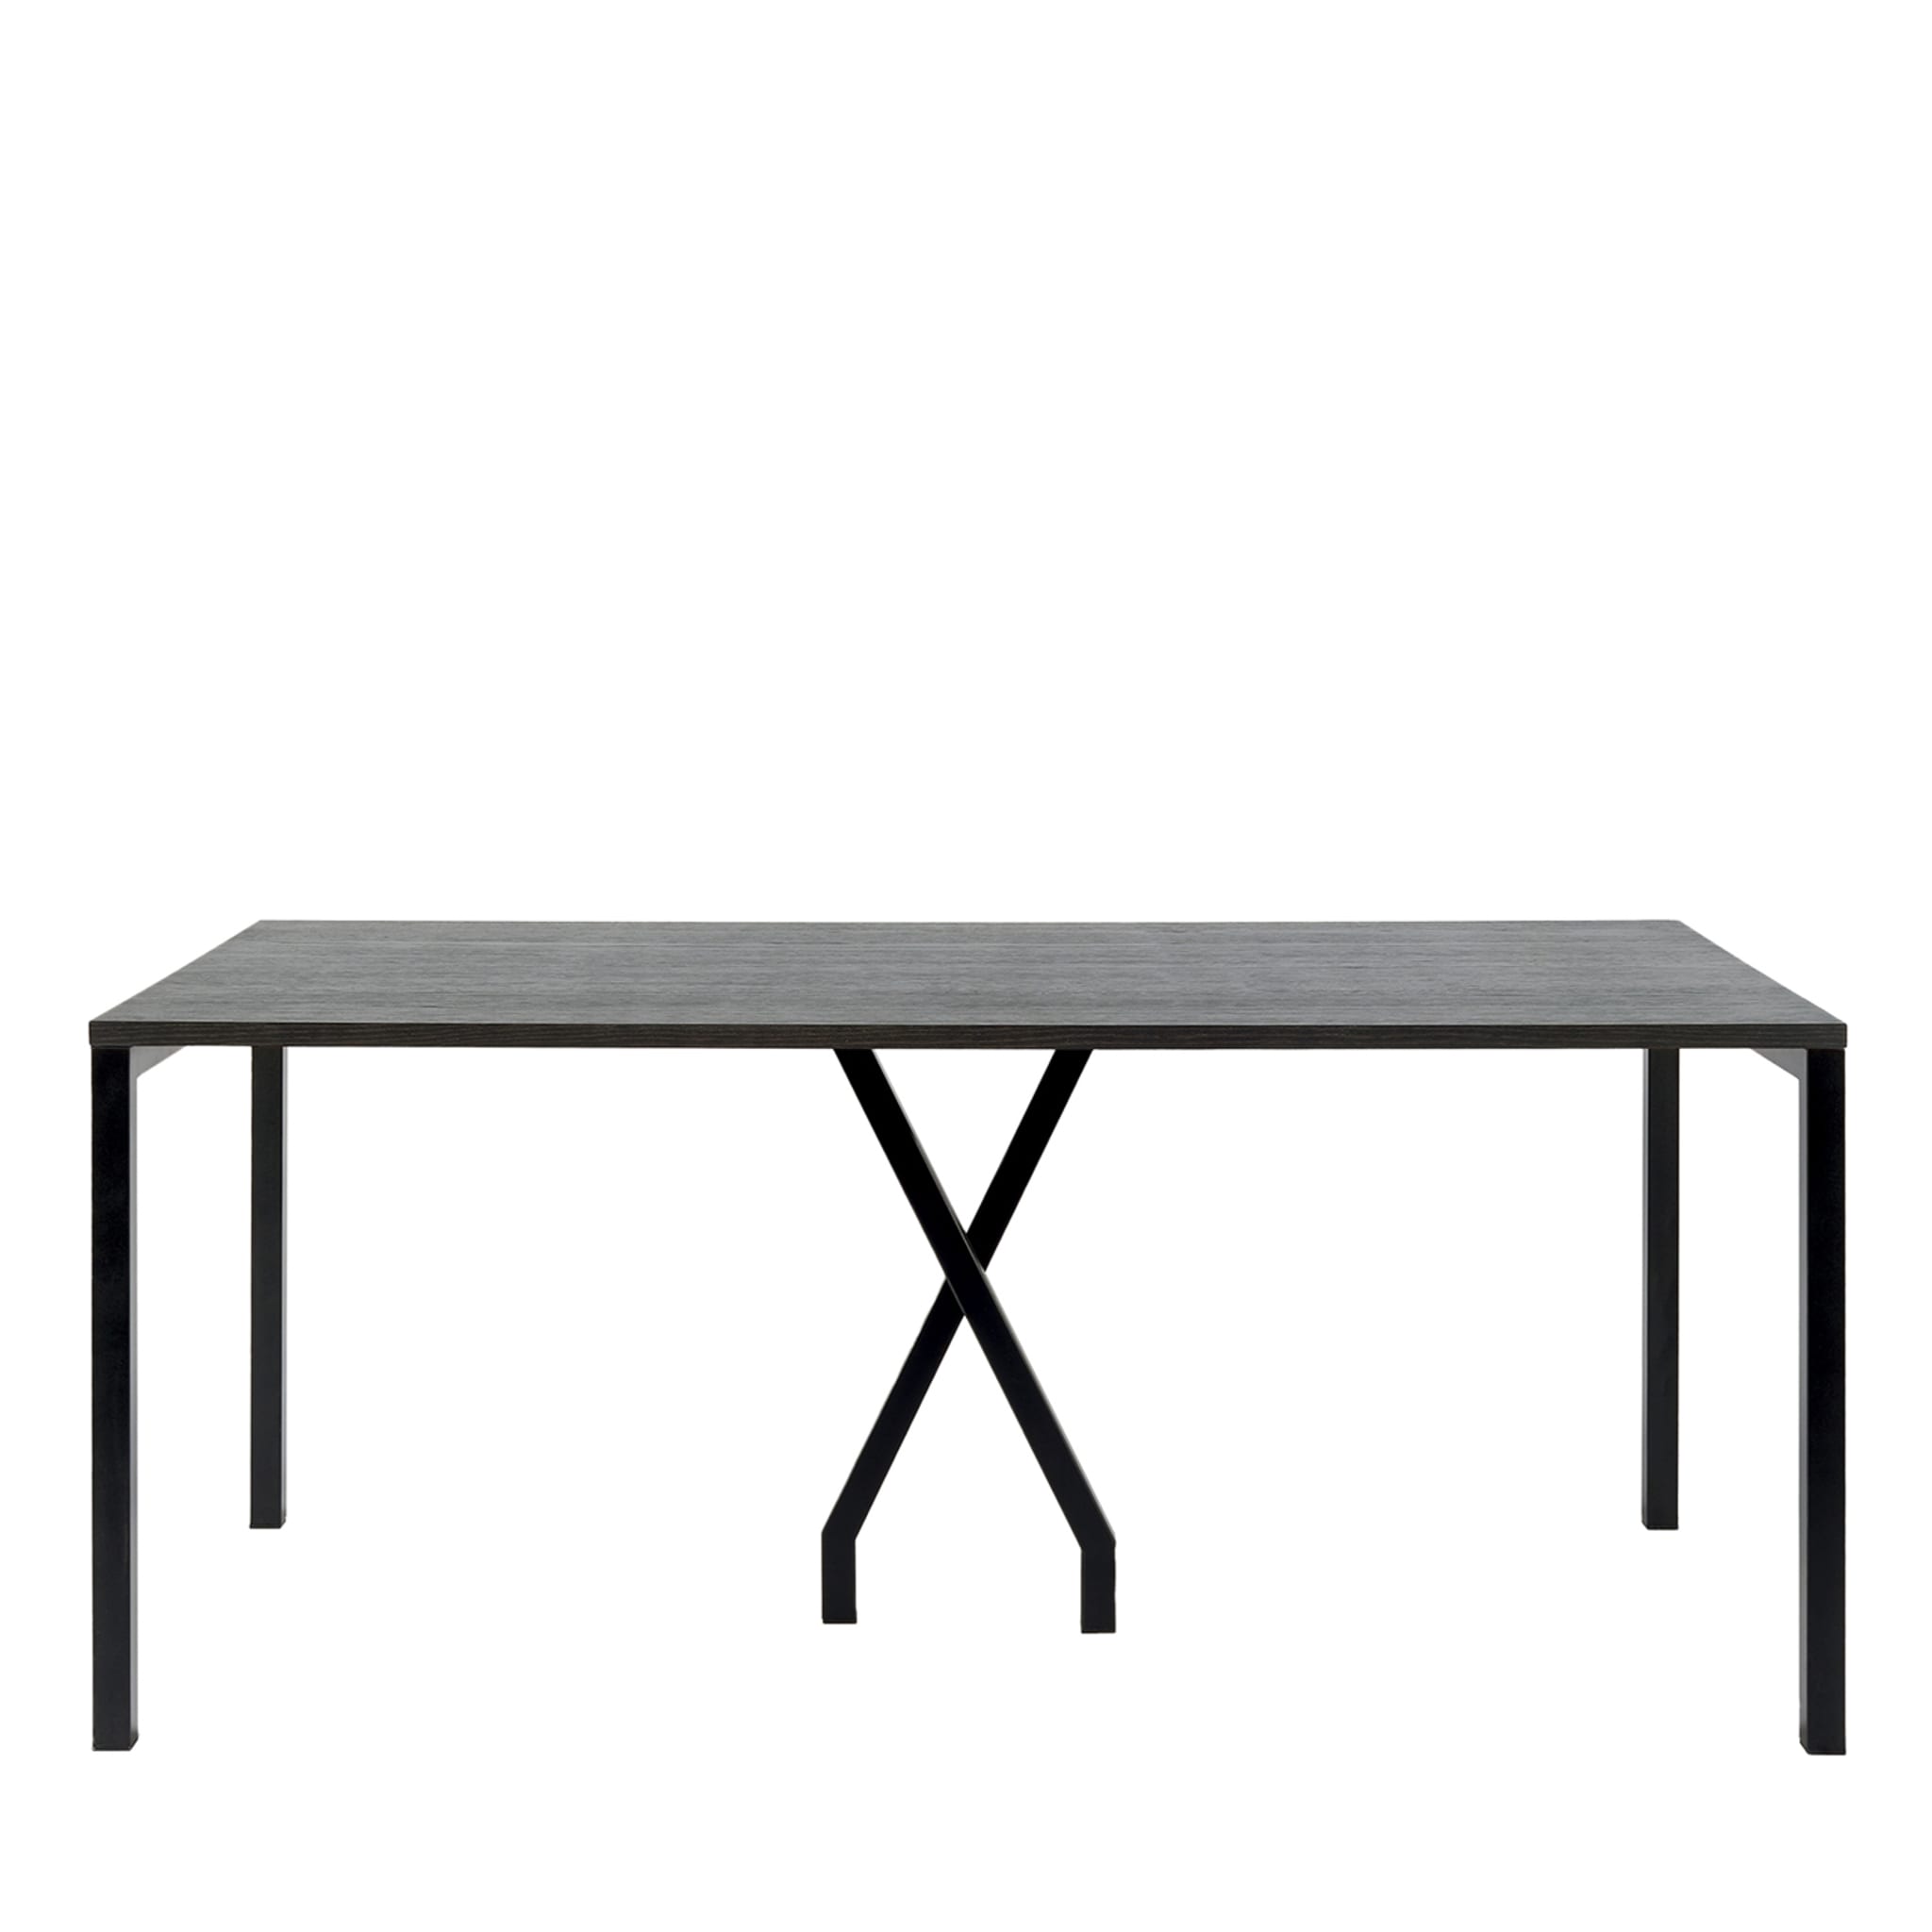 Cavalletta Rectangular Black Table by Studiocharlie - Main view